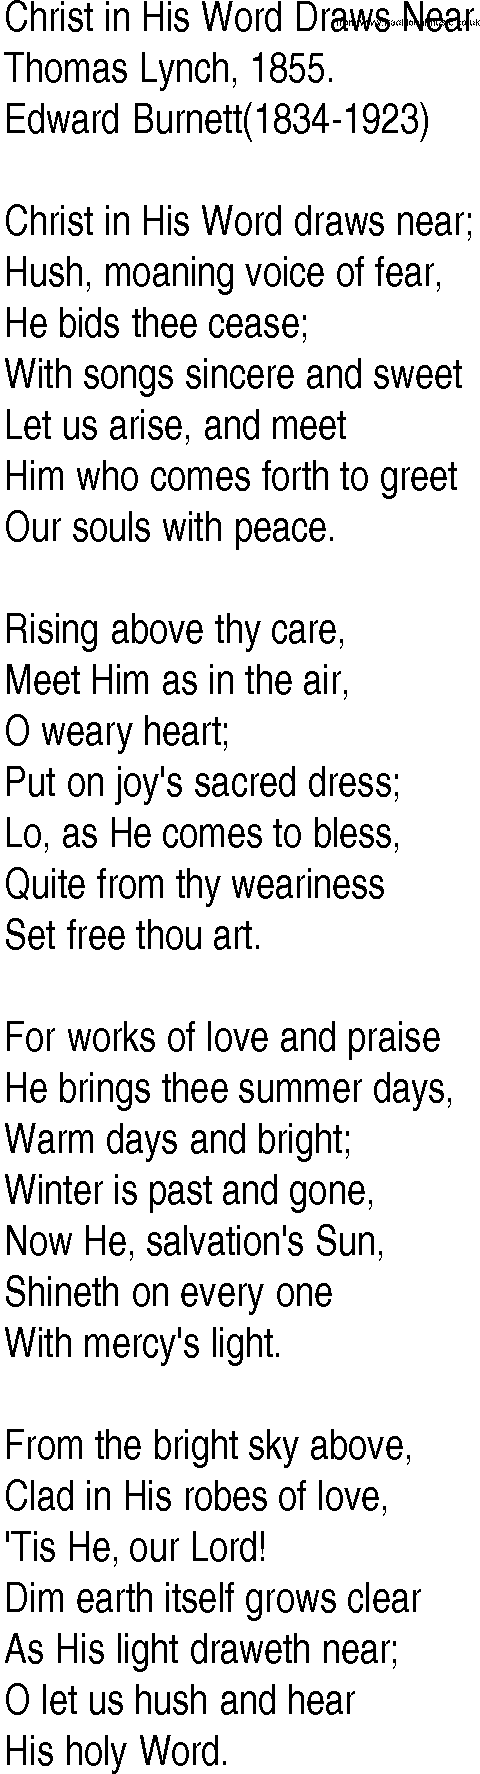 Hymn and Gospel Song: Christ in His Word Draws Near by Thomas Lynch lyrics